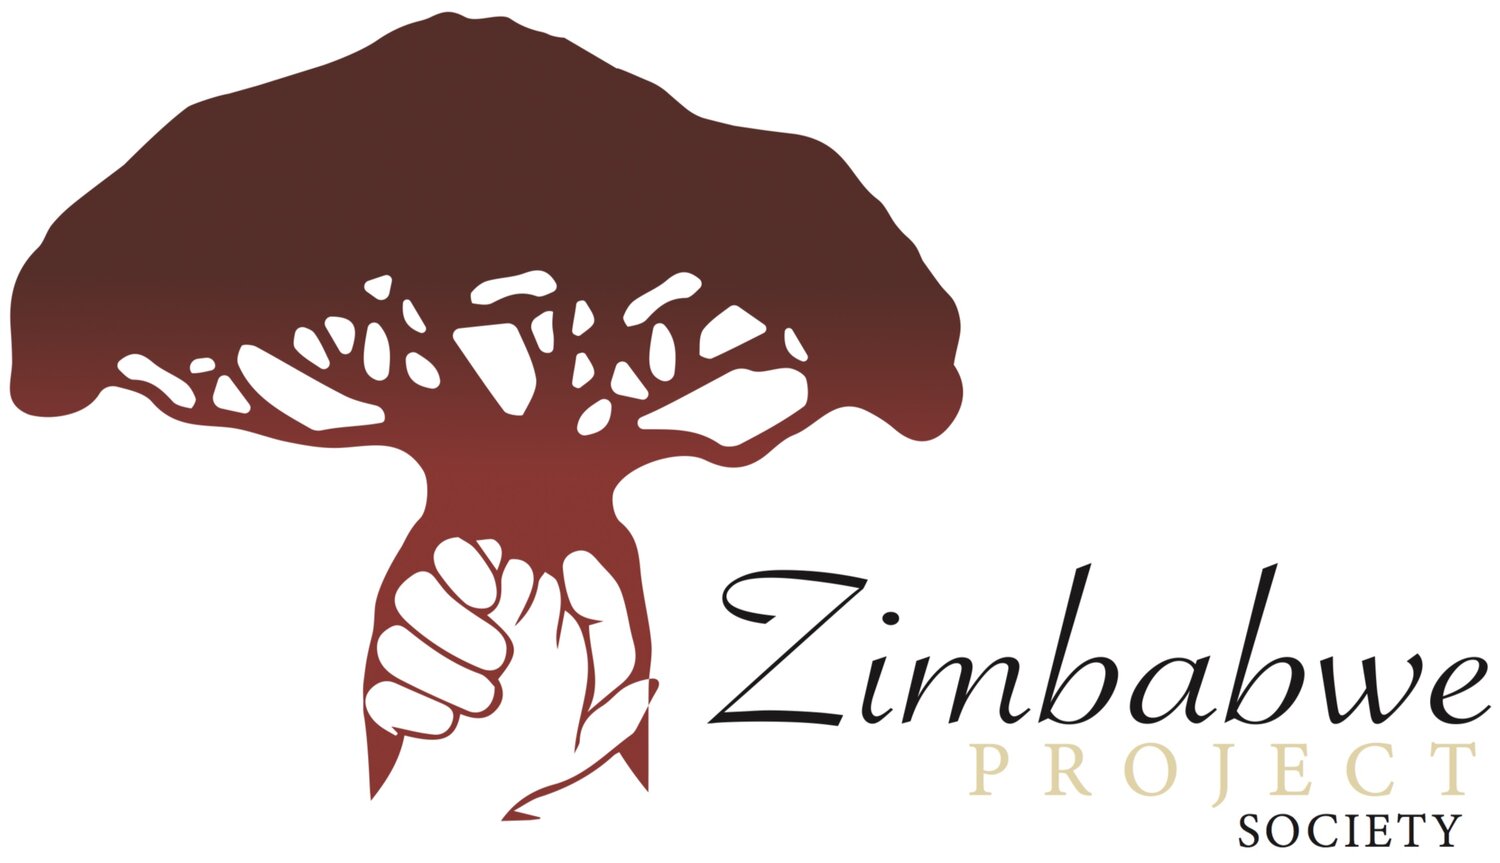 Zimbabwe Project Society